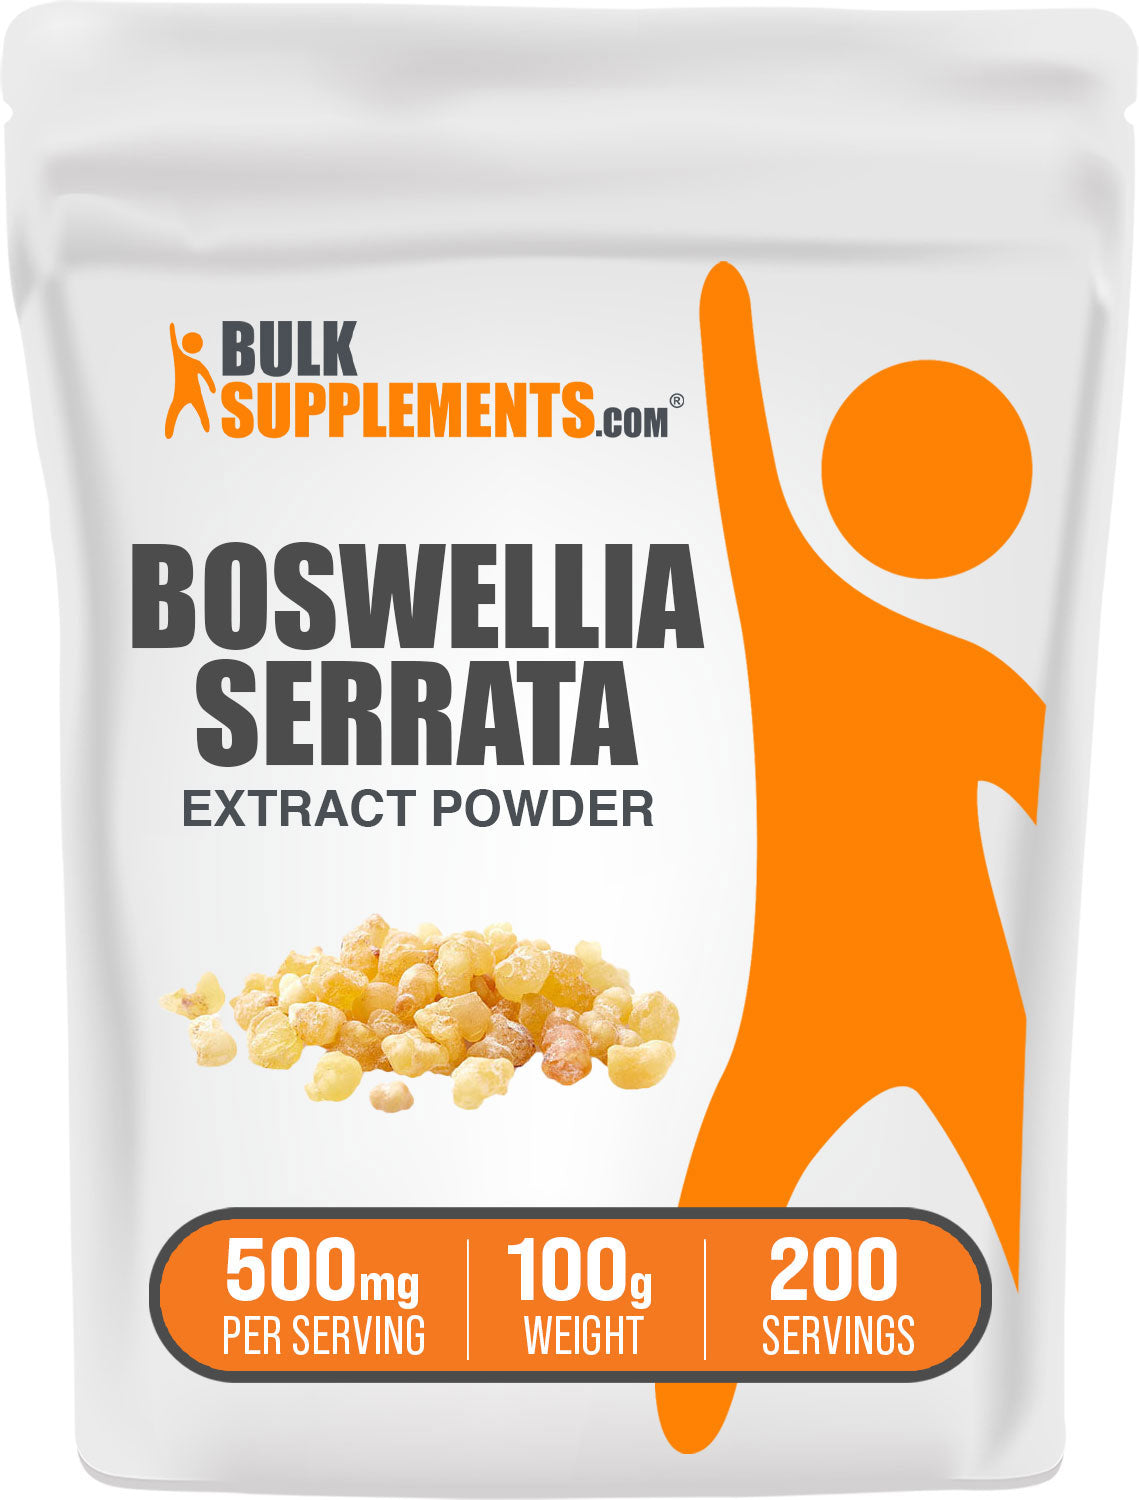 Boswellia Serrata Extract Powder 100g Bag